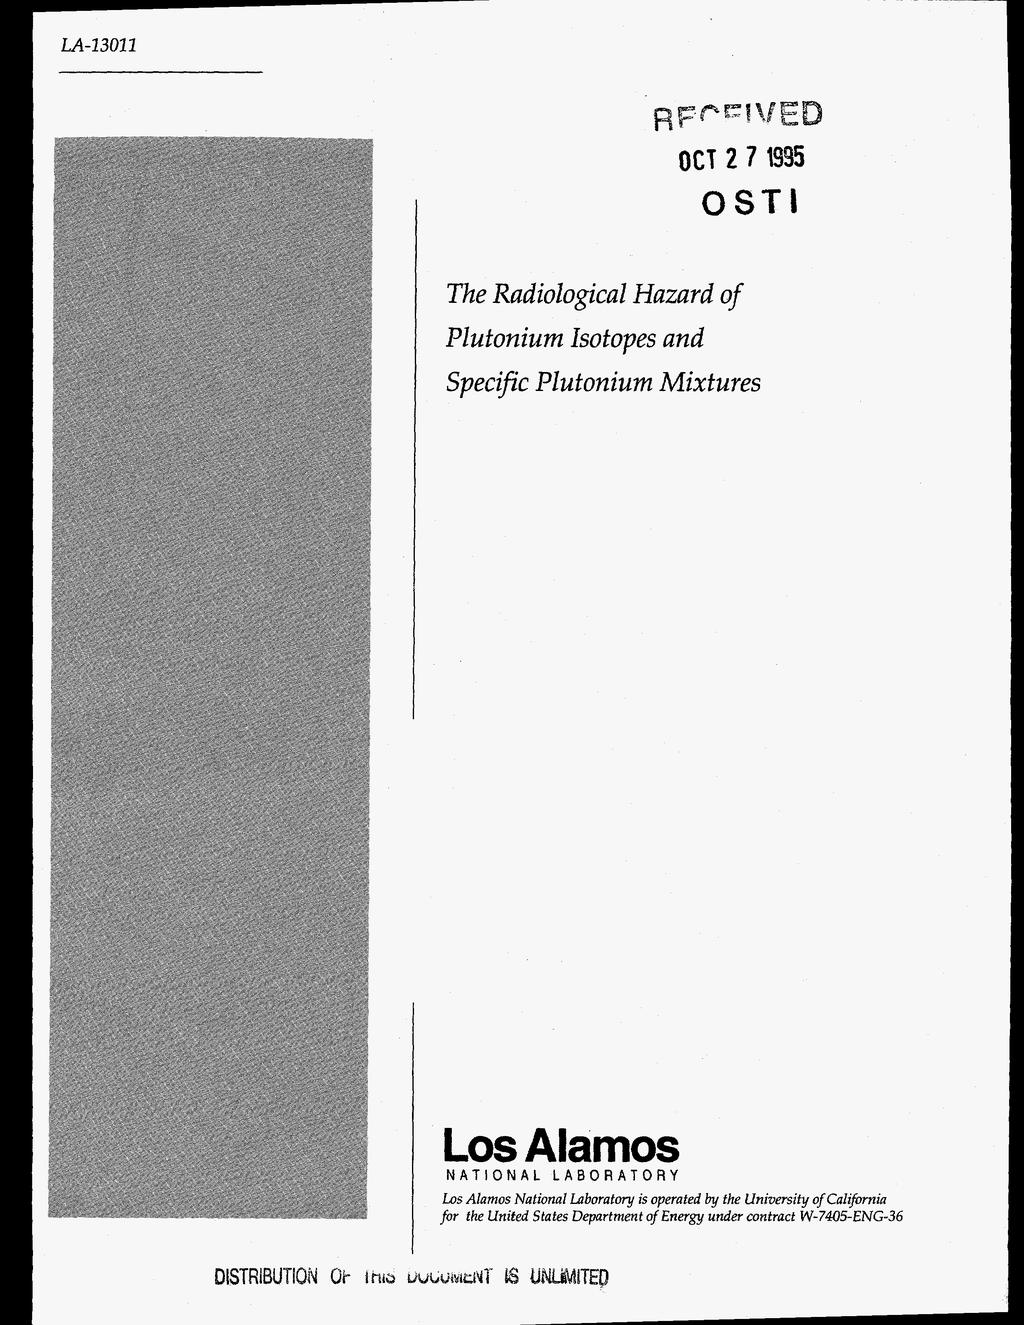 LA-13021 The Radiological Hazard of Plutonium sotopes and SpecFc Plutonium Mixtures Los Alamos NATONAL LABORATORY Los Alamos